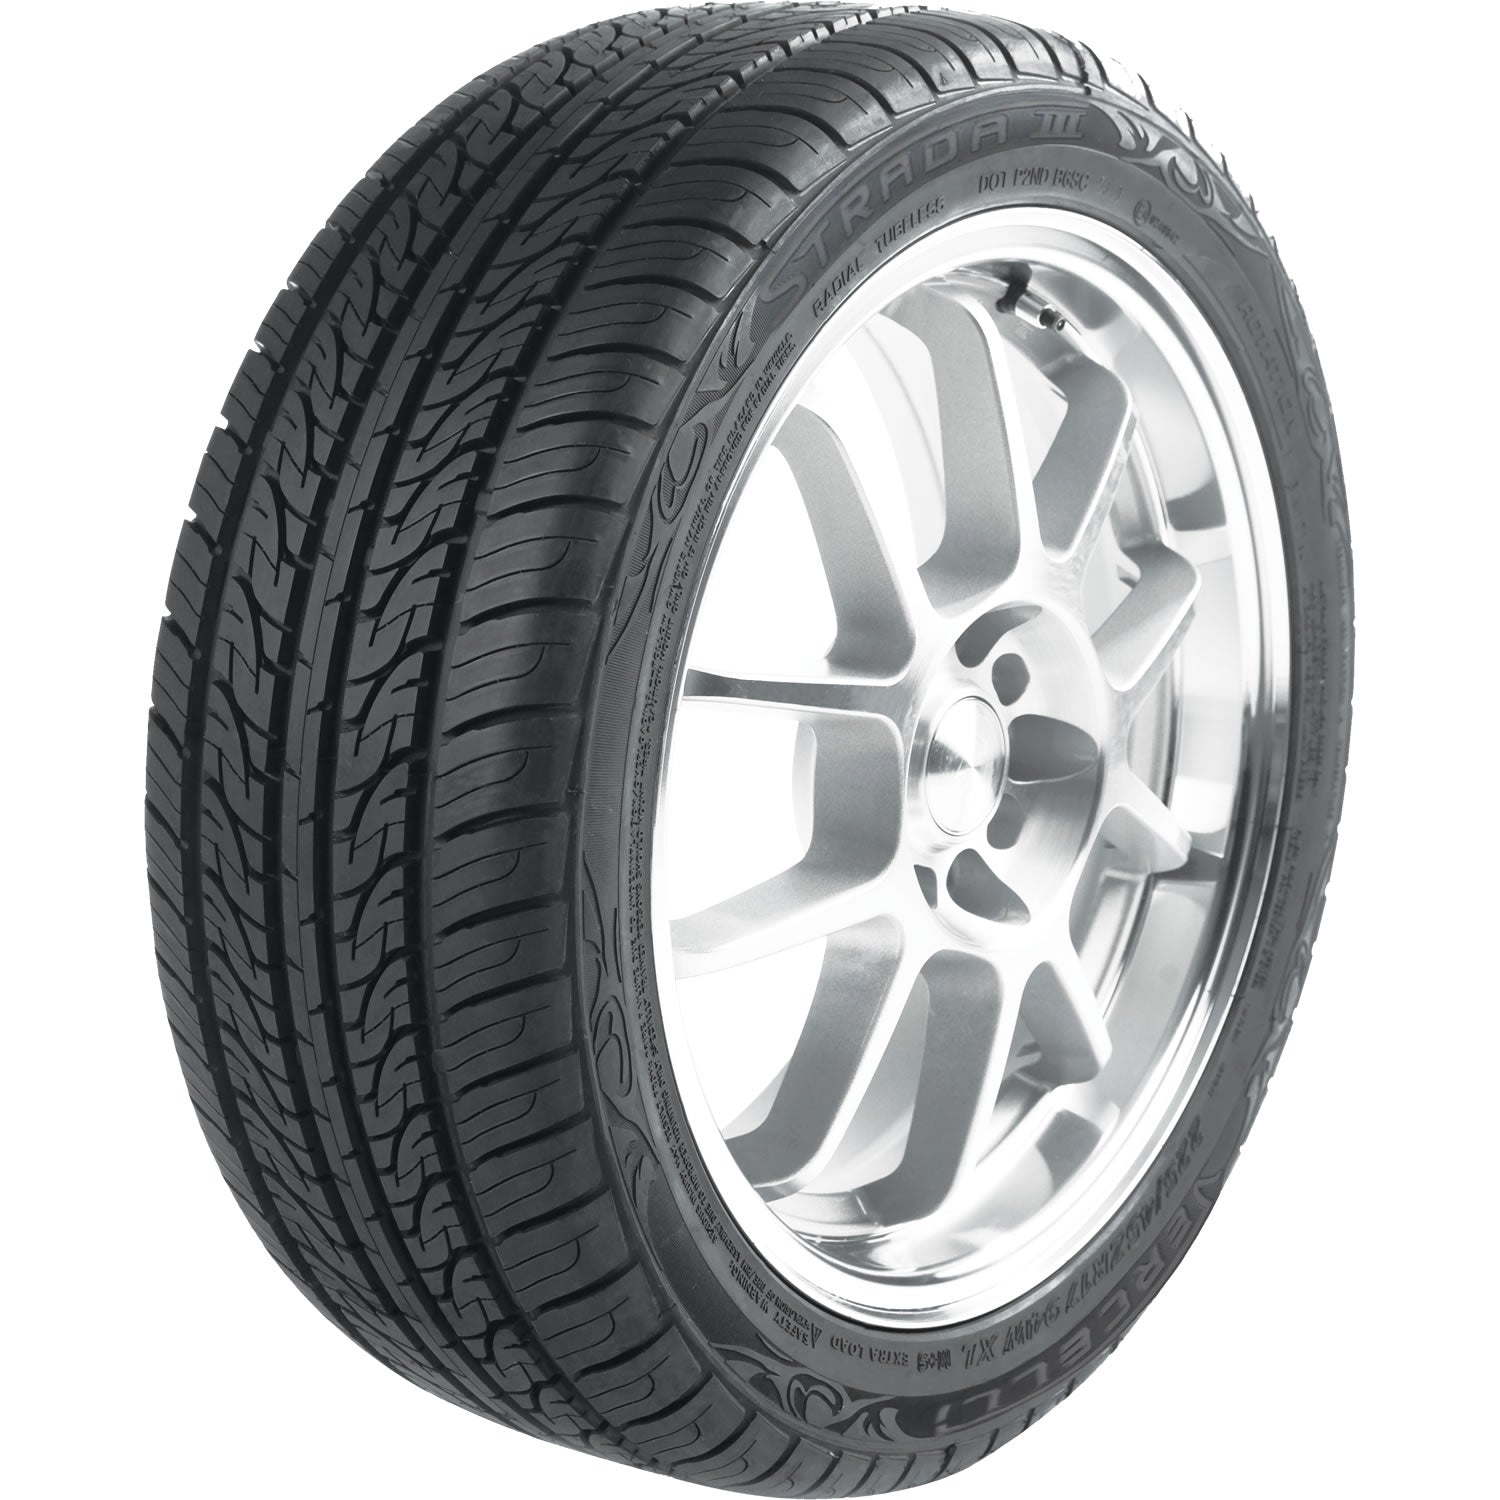 VERCELLI STRADA II 235/40R17 (24.4X9.3R 17) Tires